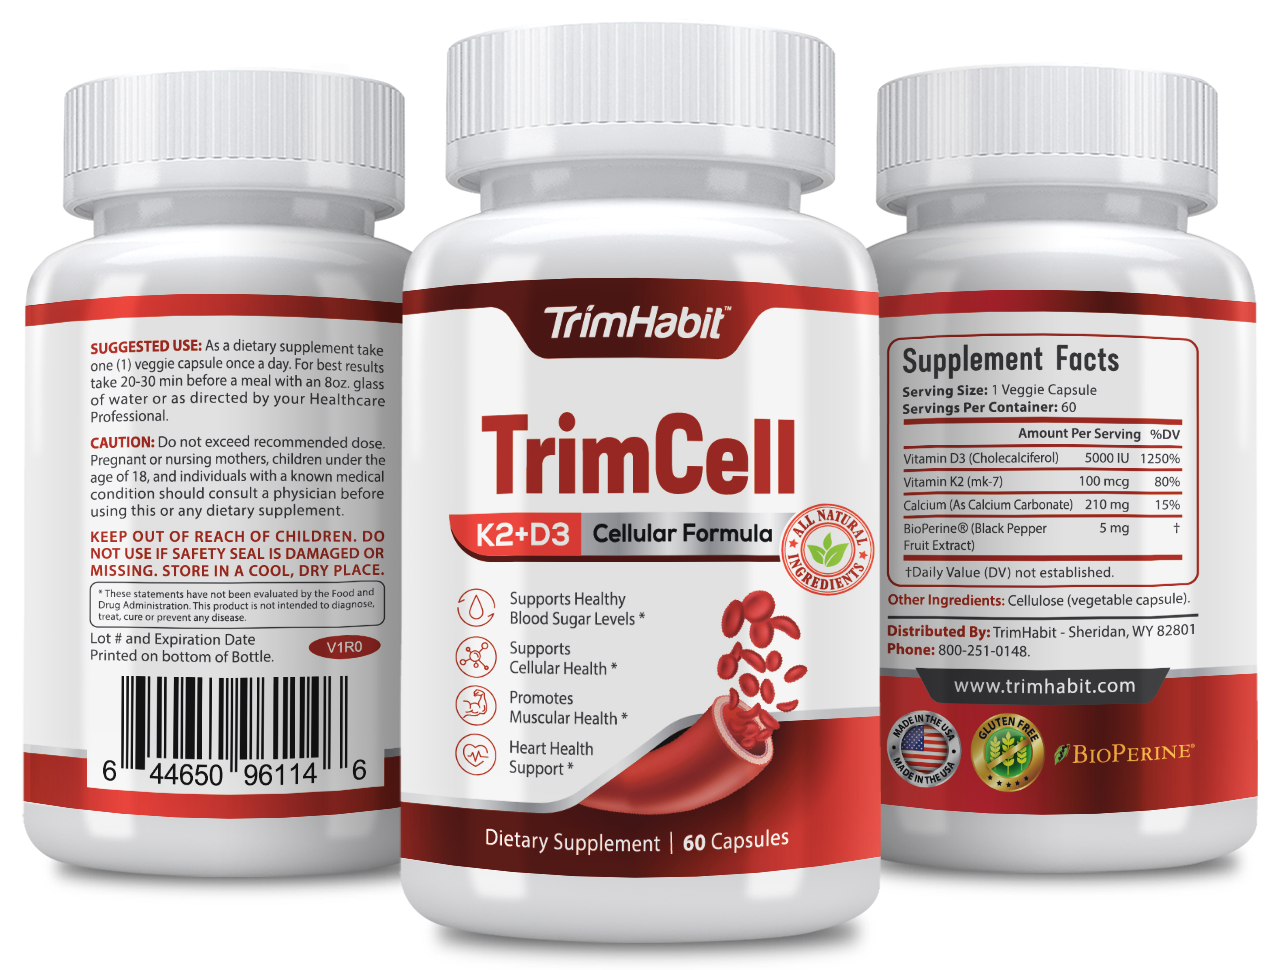 TrimCell K2+D3 Cellular Formula